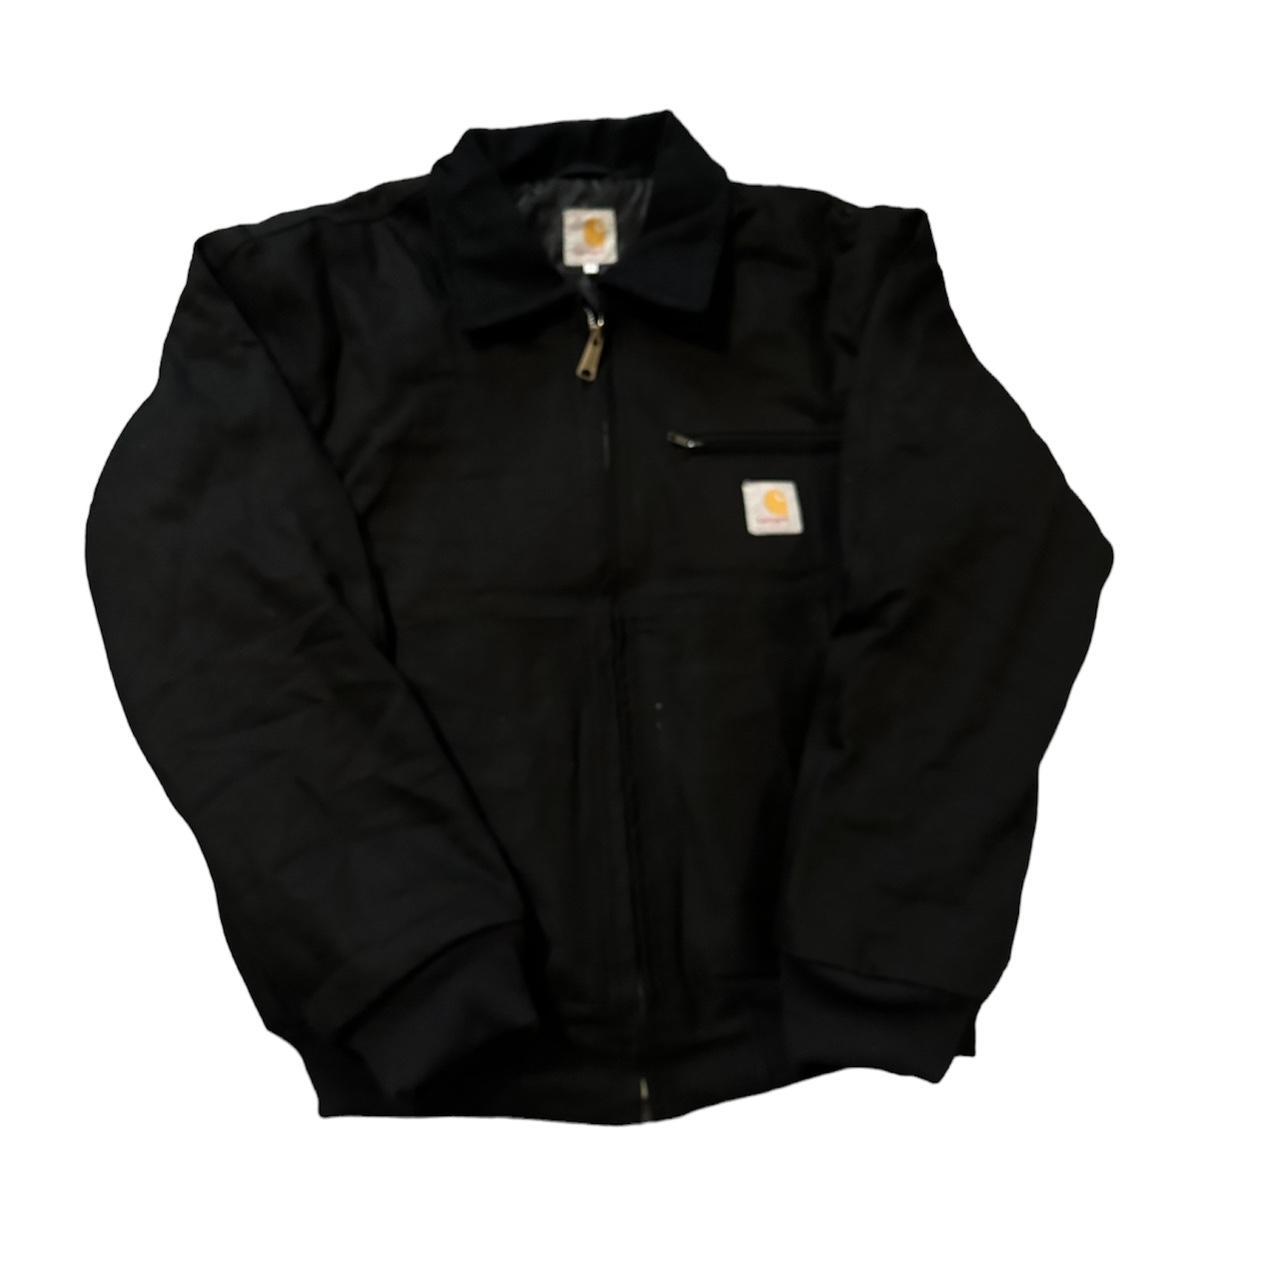 Black reworked carhartt jacket with pockets. Sized... - Depop